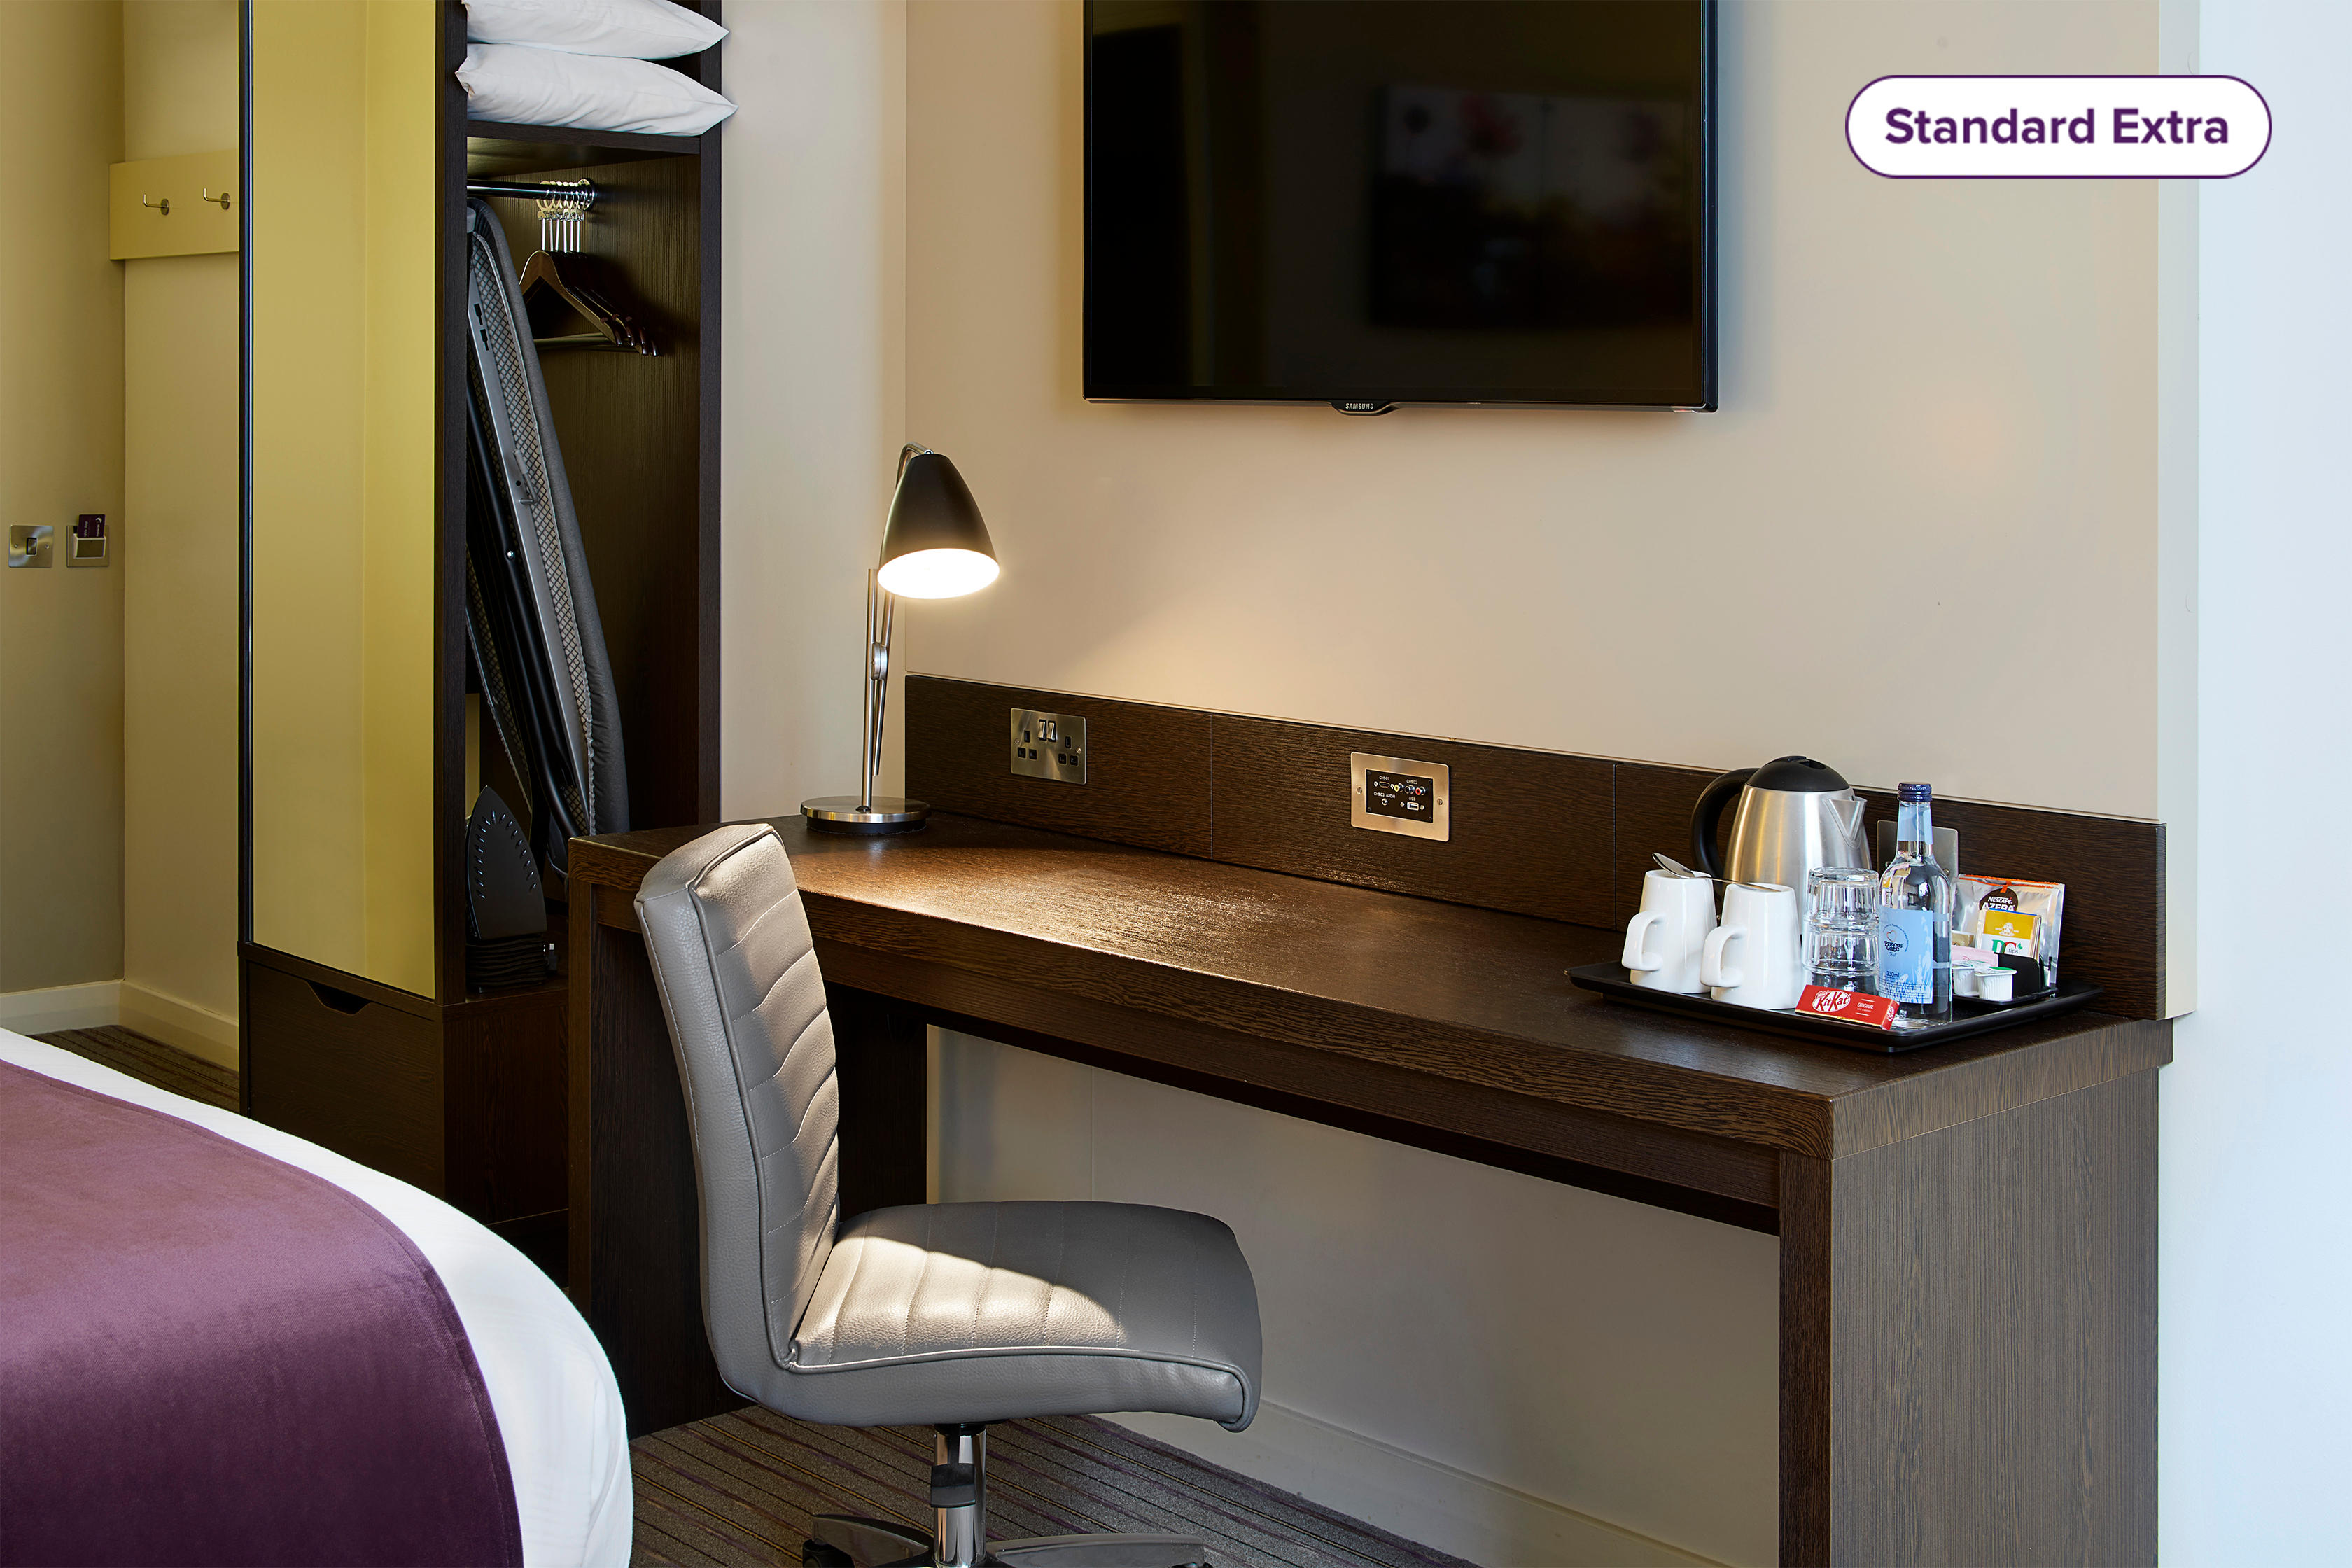 Standard Extra Bedroom with TV Premier Inn St Albans City Centre hotel St Albans 03333 219331